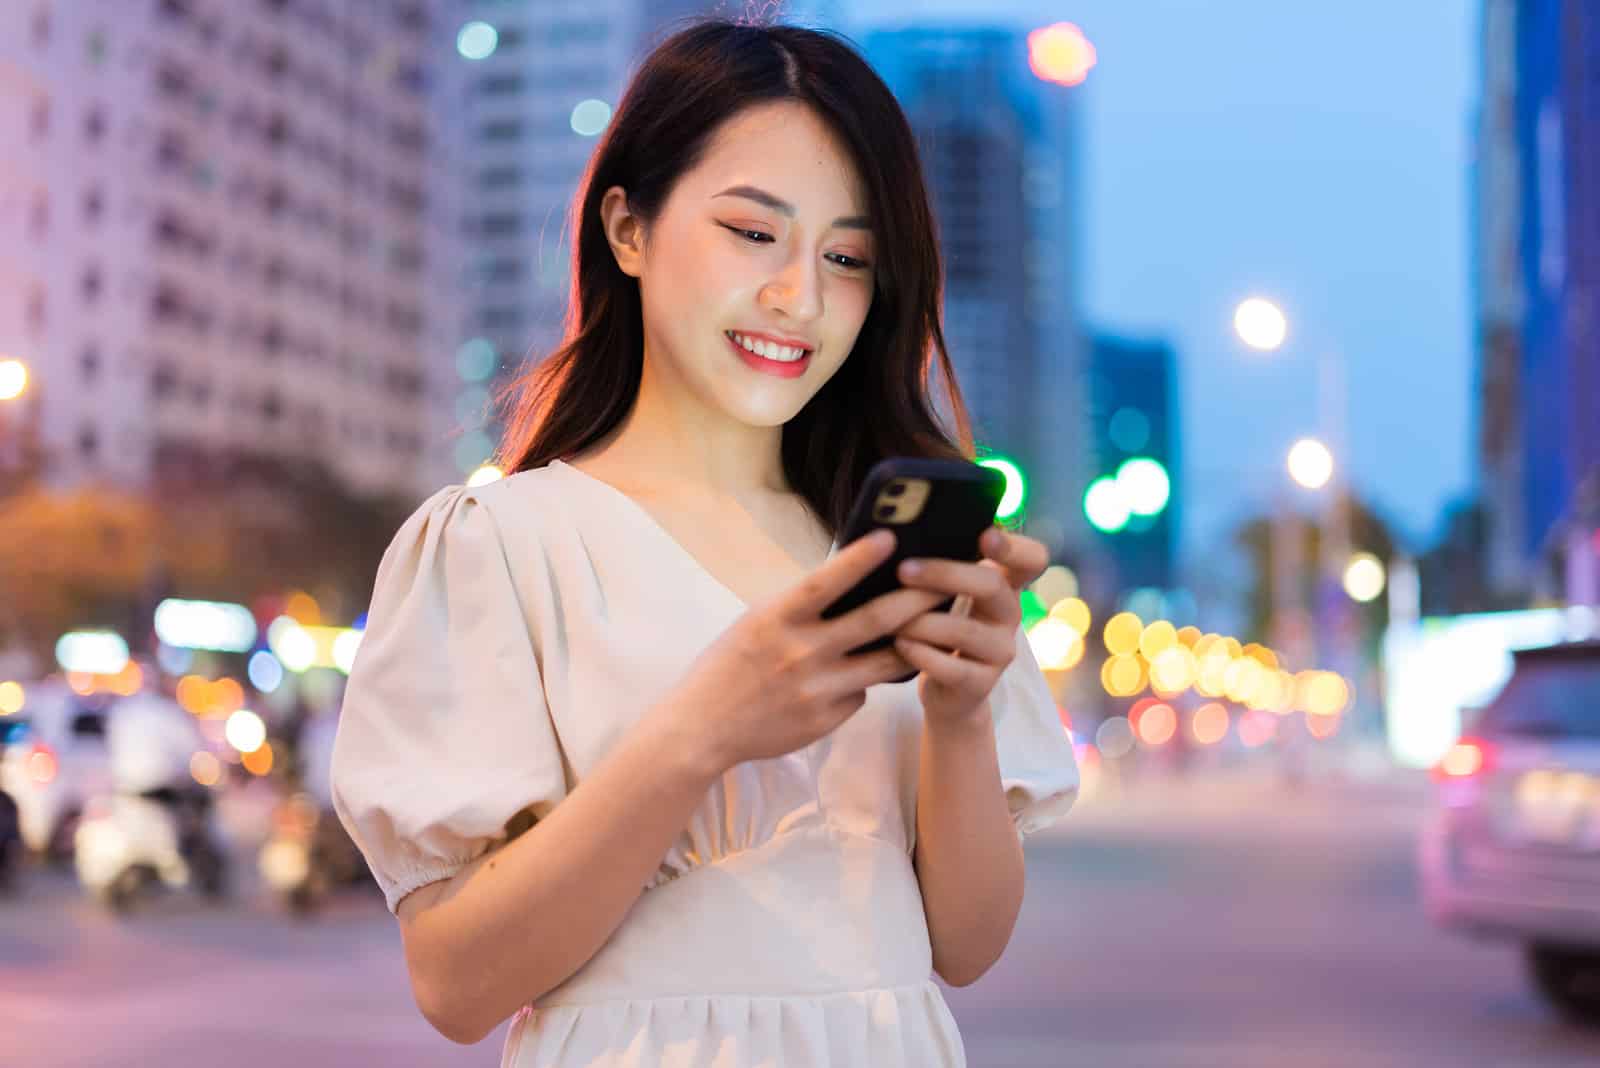 Mulher jovem a utilizar o smartphone na rua à noite